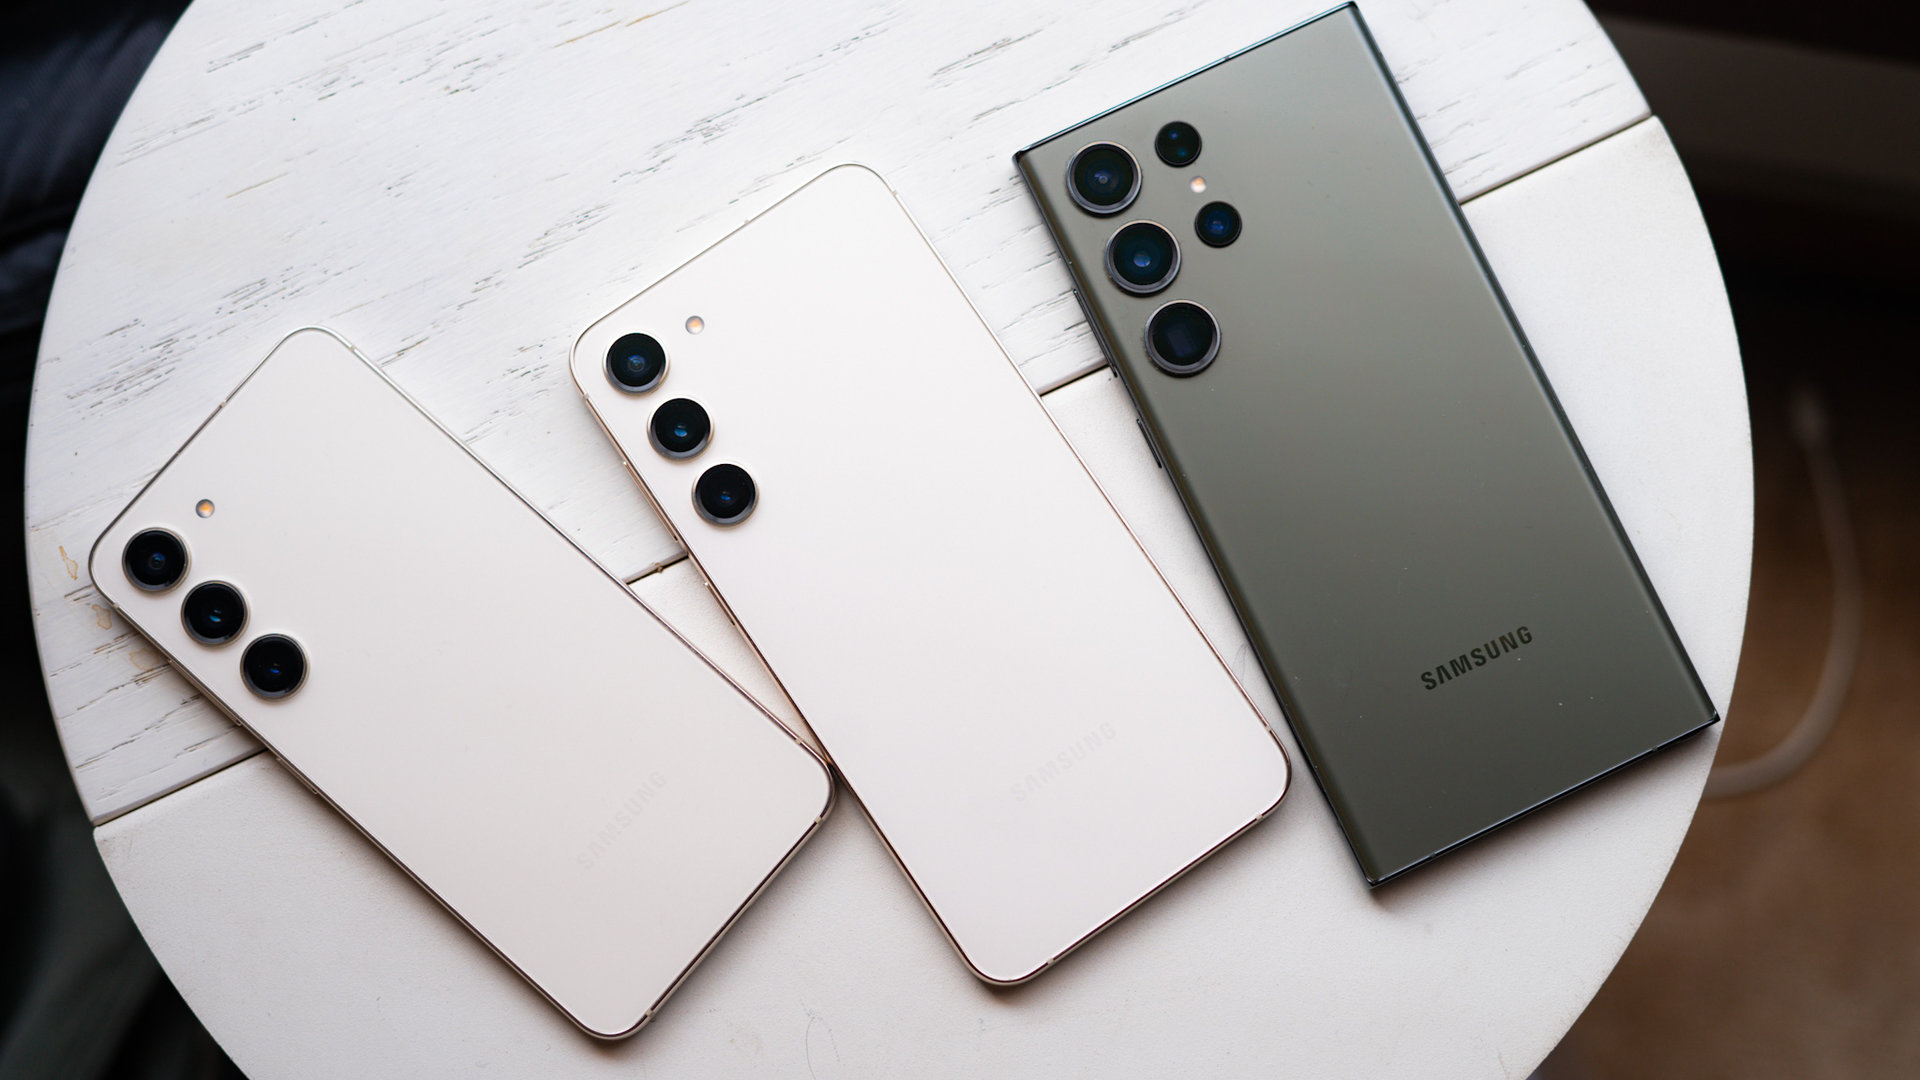 Samsung Phone Models Prices